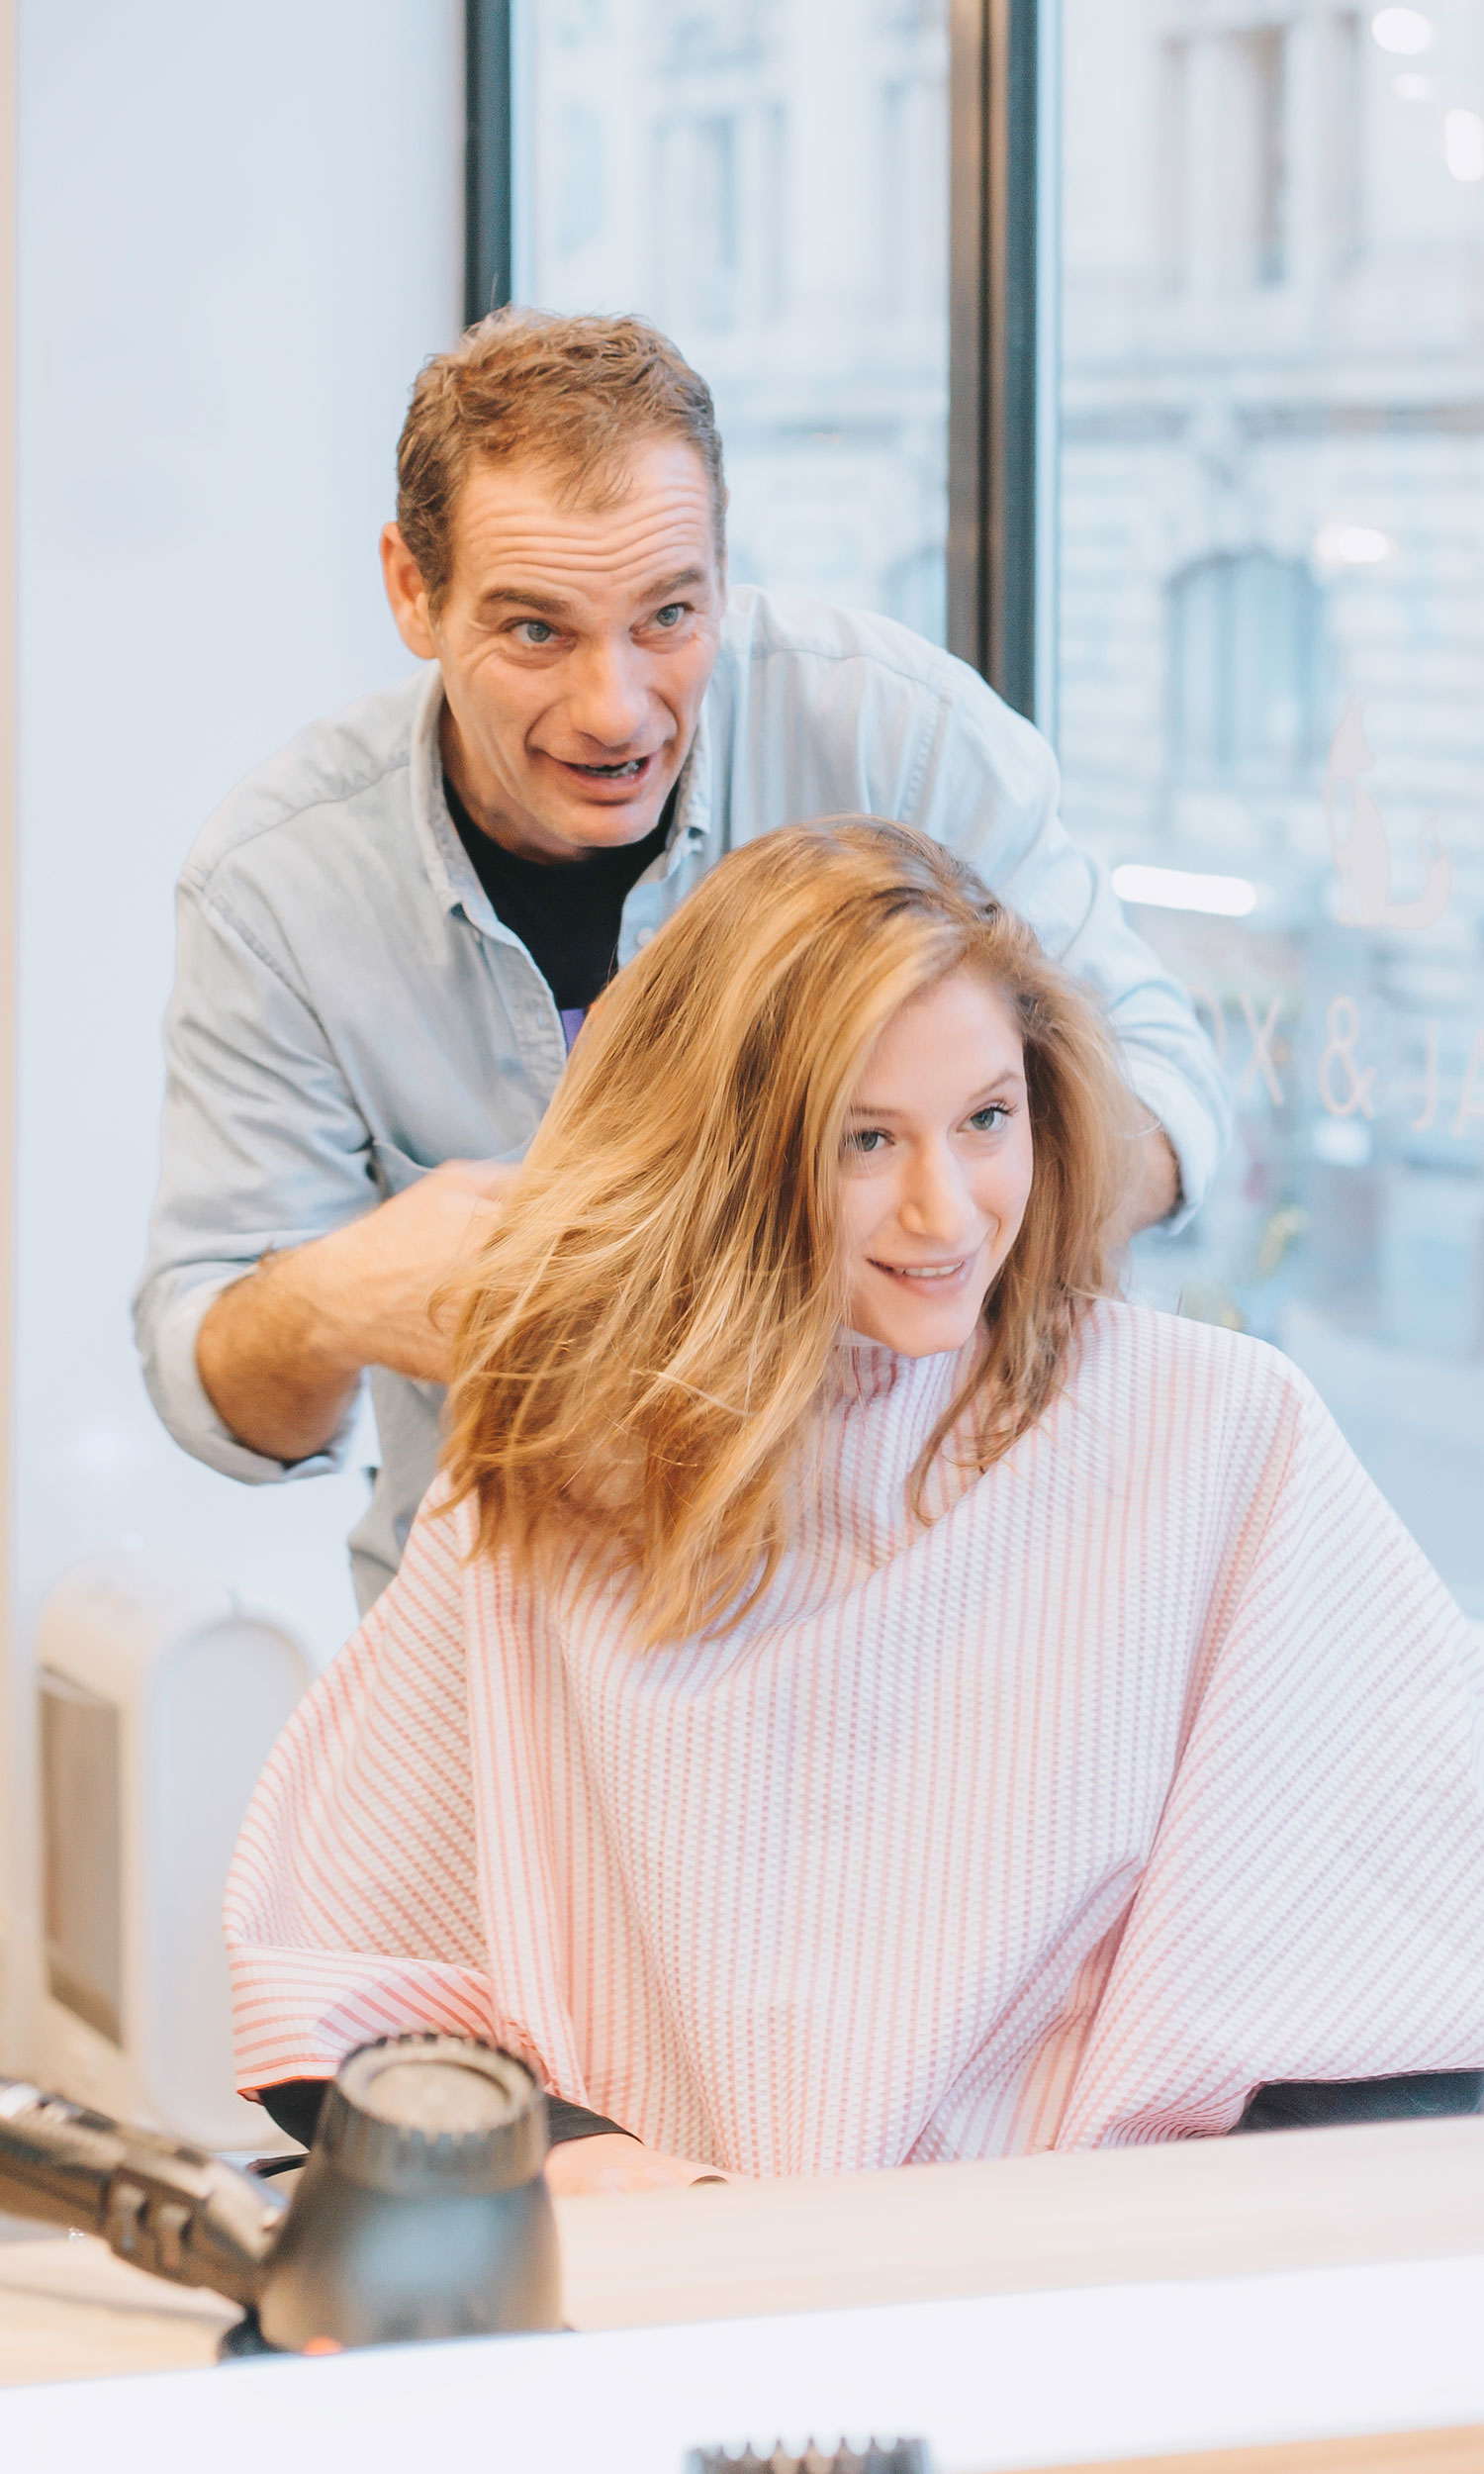 Hair stylists cut hair in salon